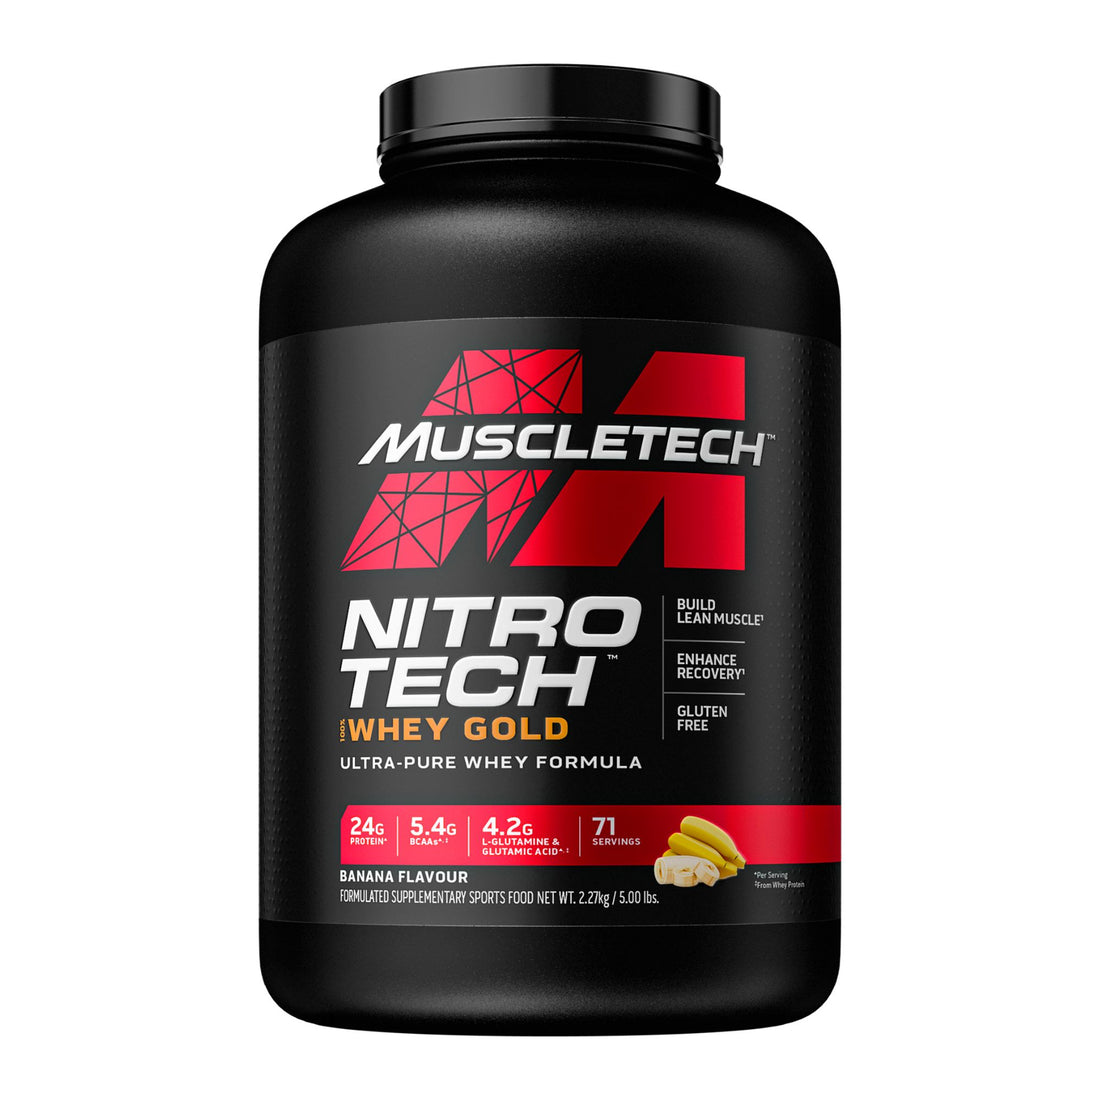 Muscletech Nitro Tech Whey Gold 5lb Clearance